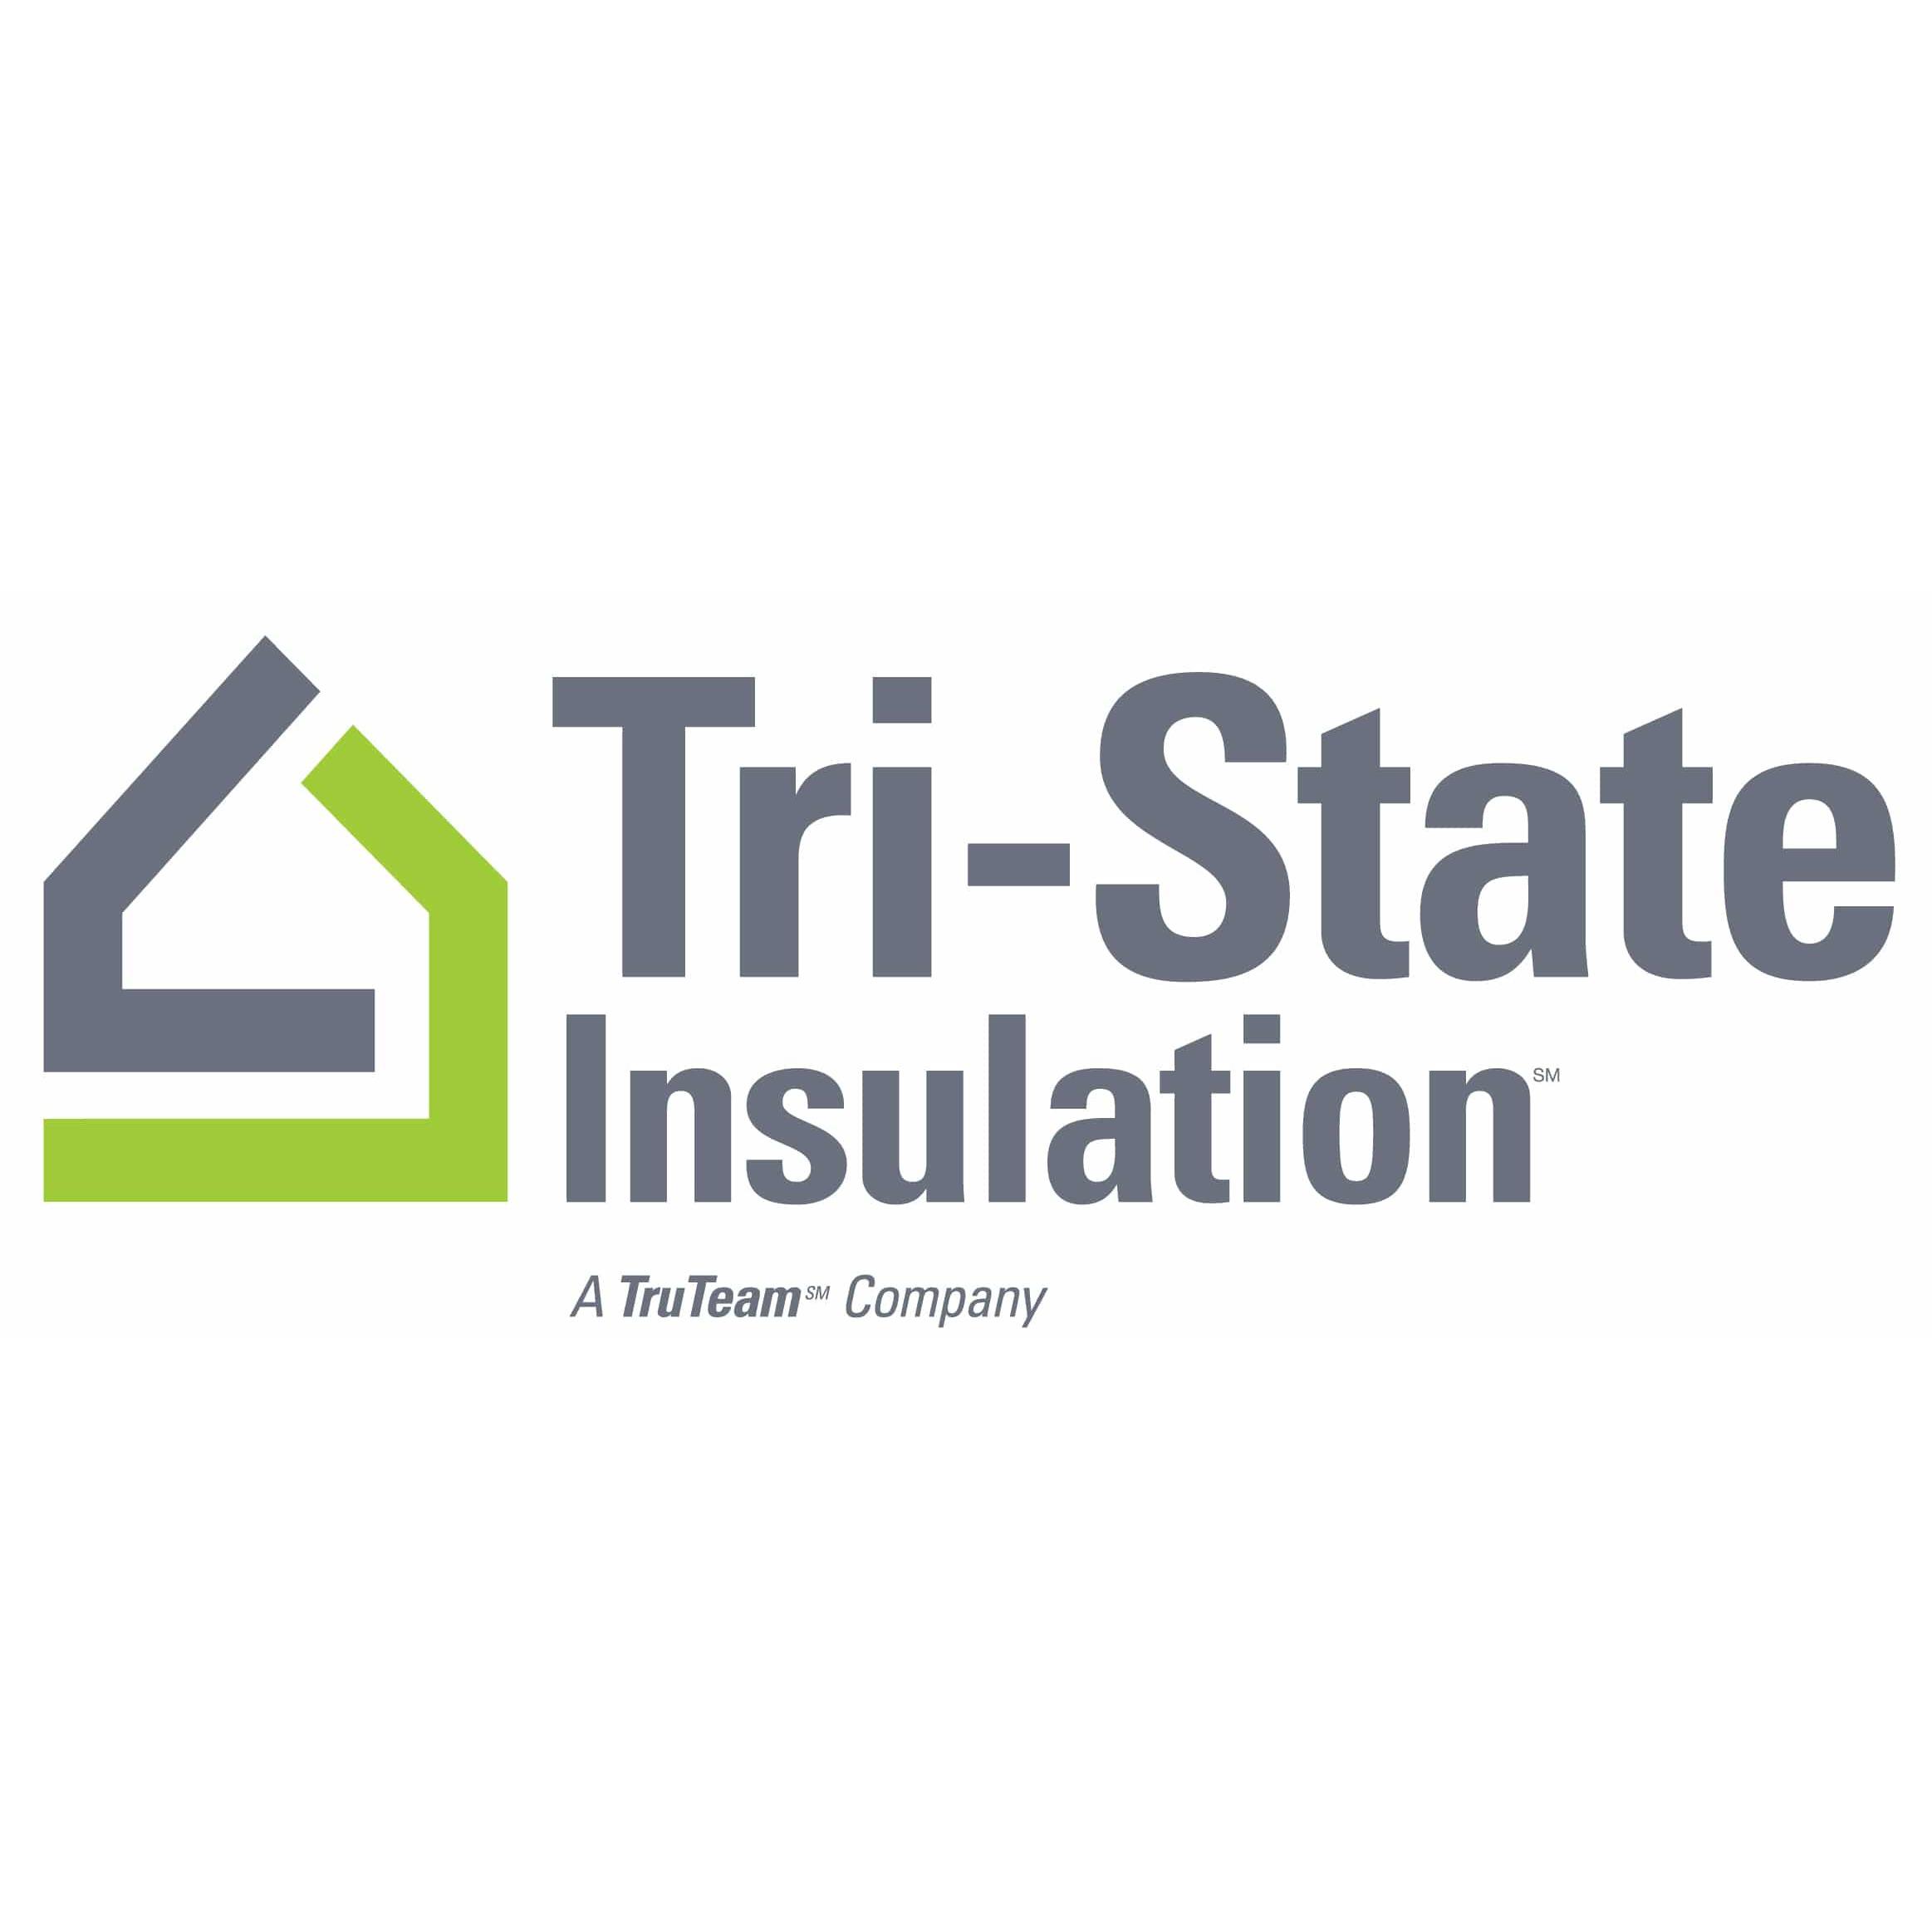 Tri-State Insulation